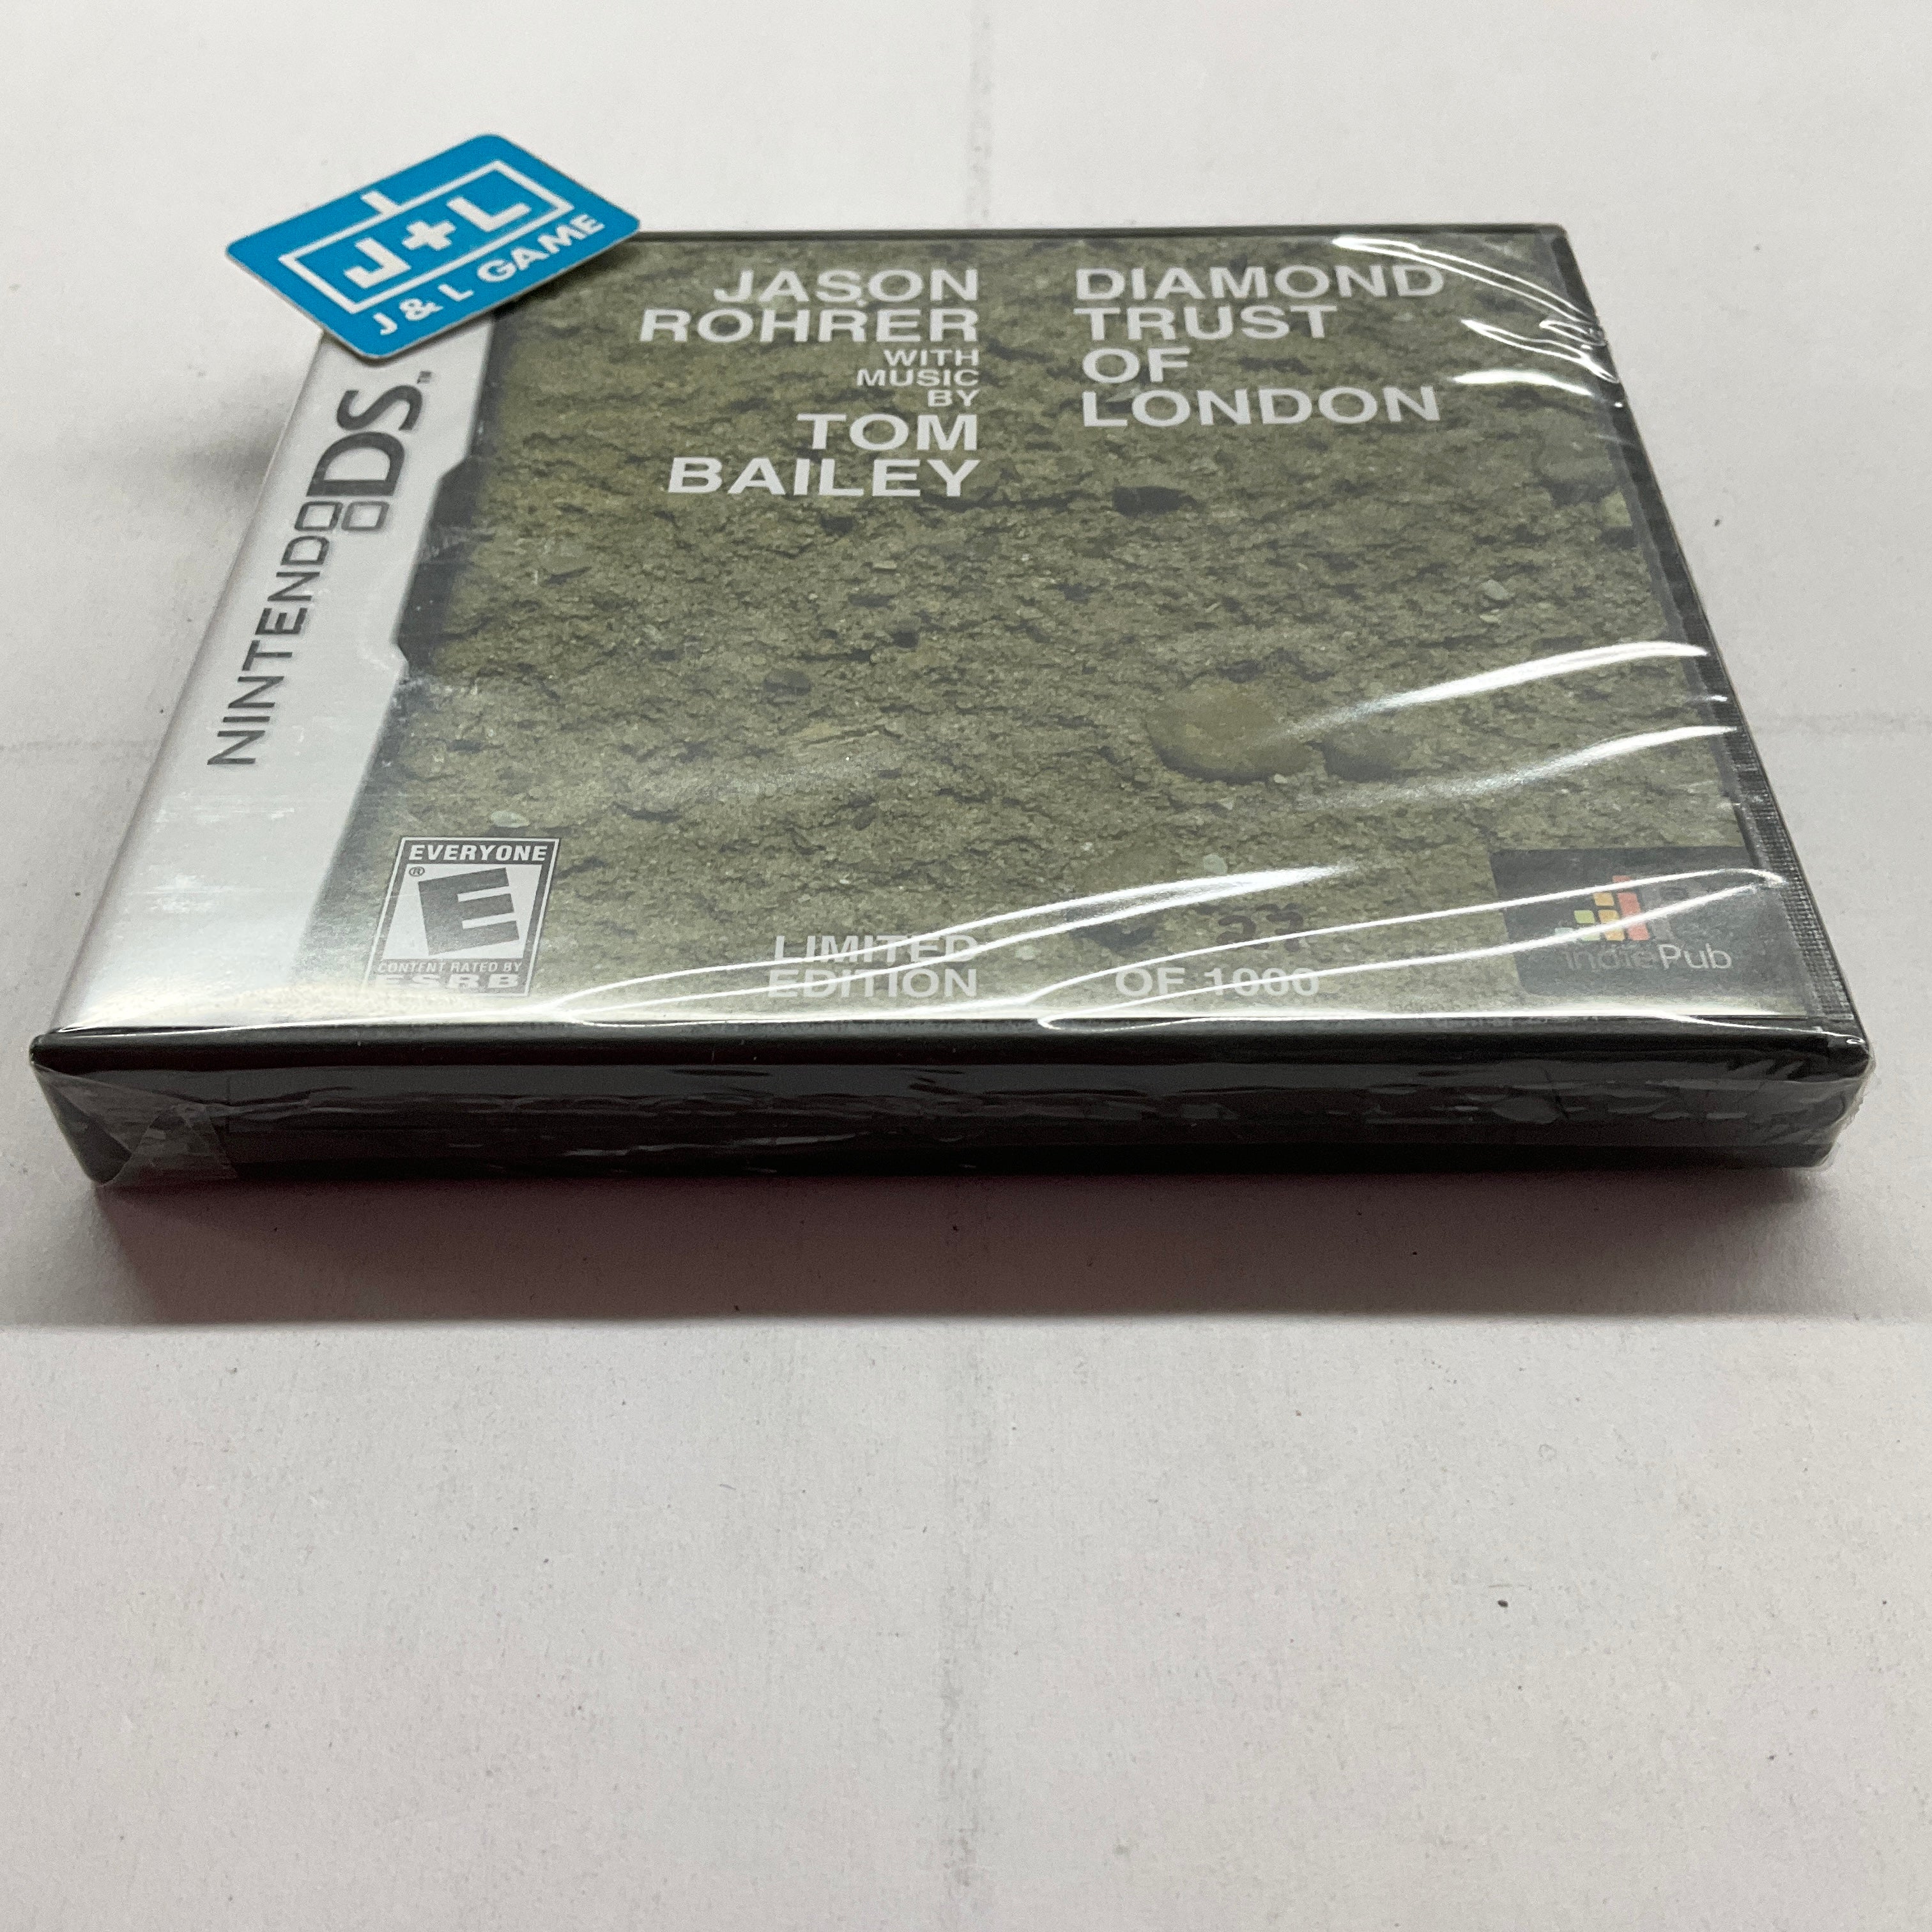 Diamond Trust of London (27/1000) - (NDS) Nintendo DS Video Games indiePub   